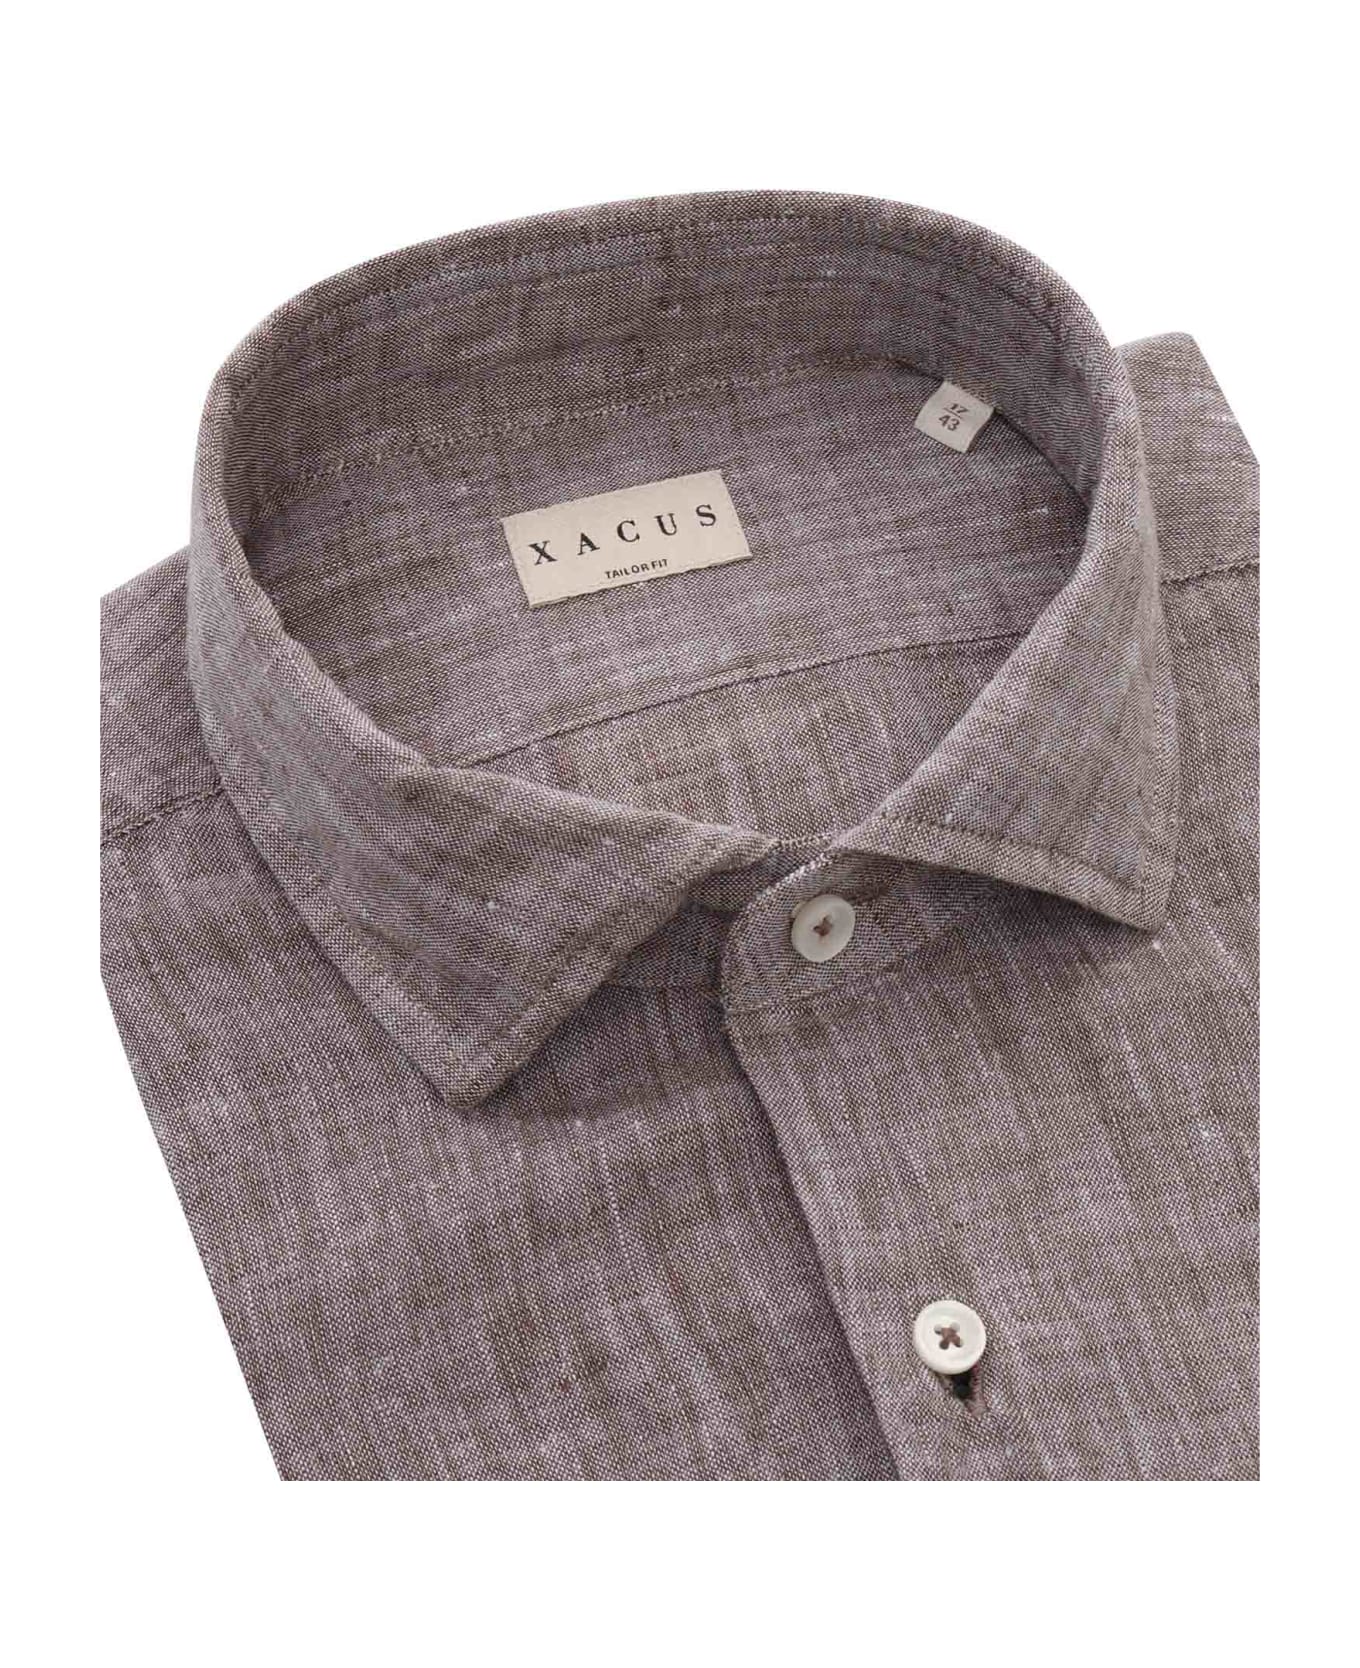 Xacus Brown Linen Shirt - BROWN